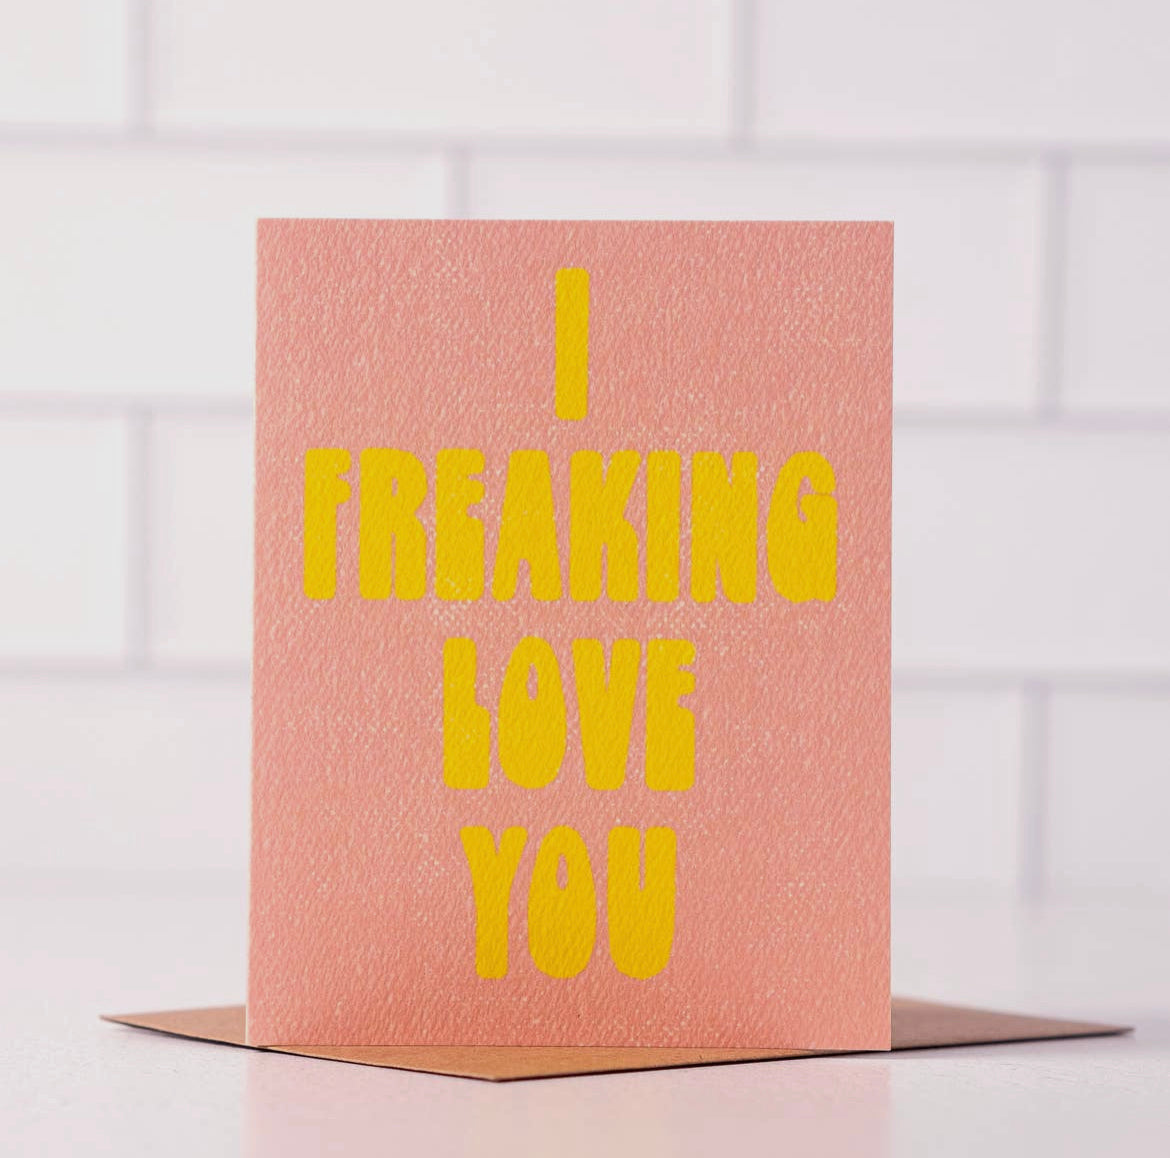 I Freaking Love You - Fun Love Day Card